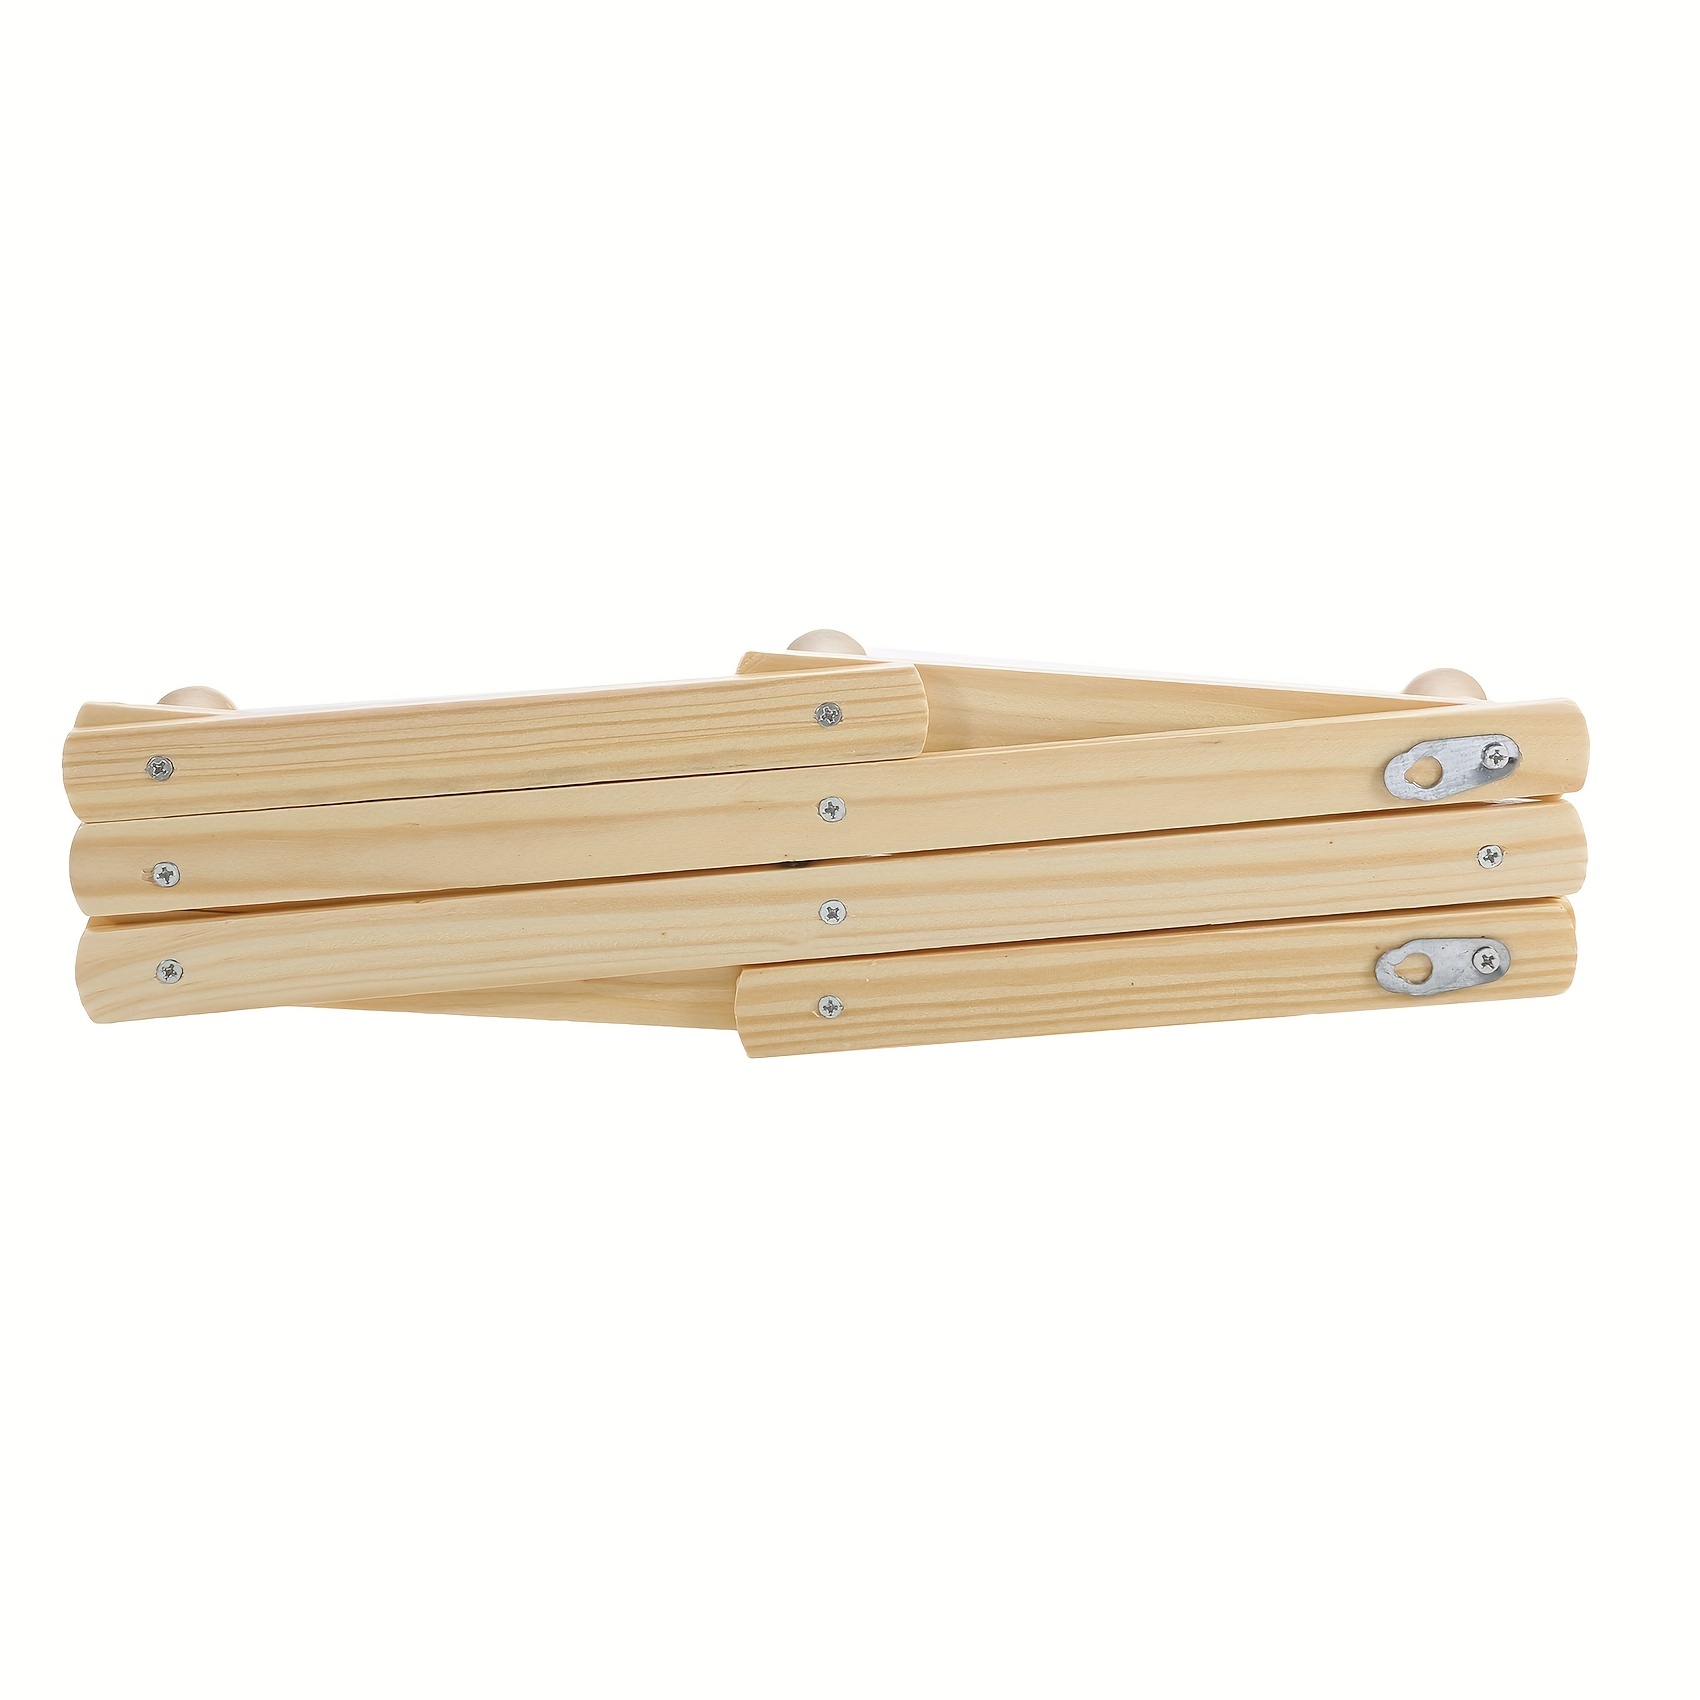 Wood Foldable Wall-Mounted Drying Rack